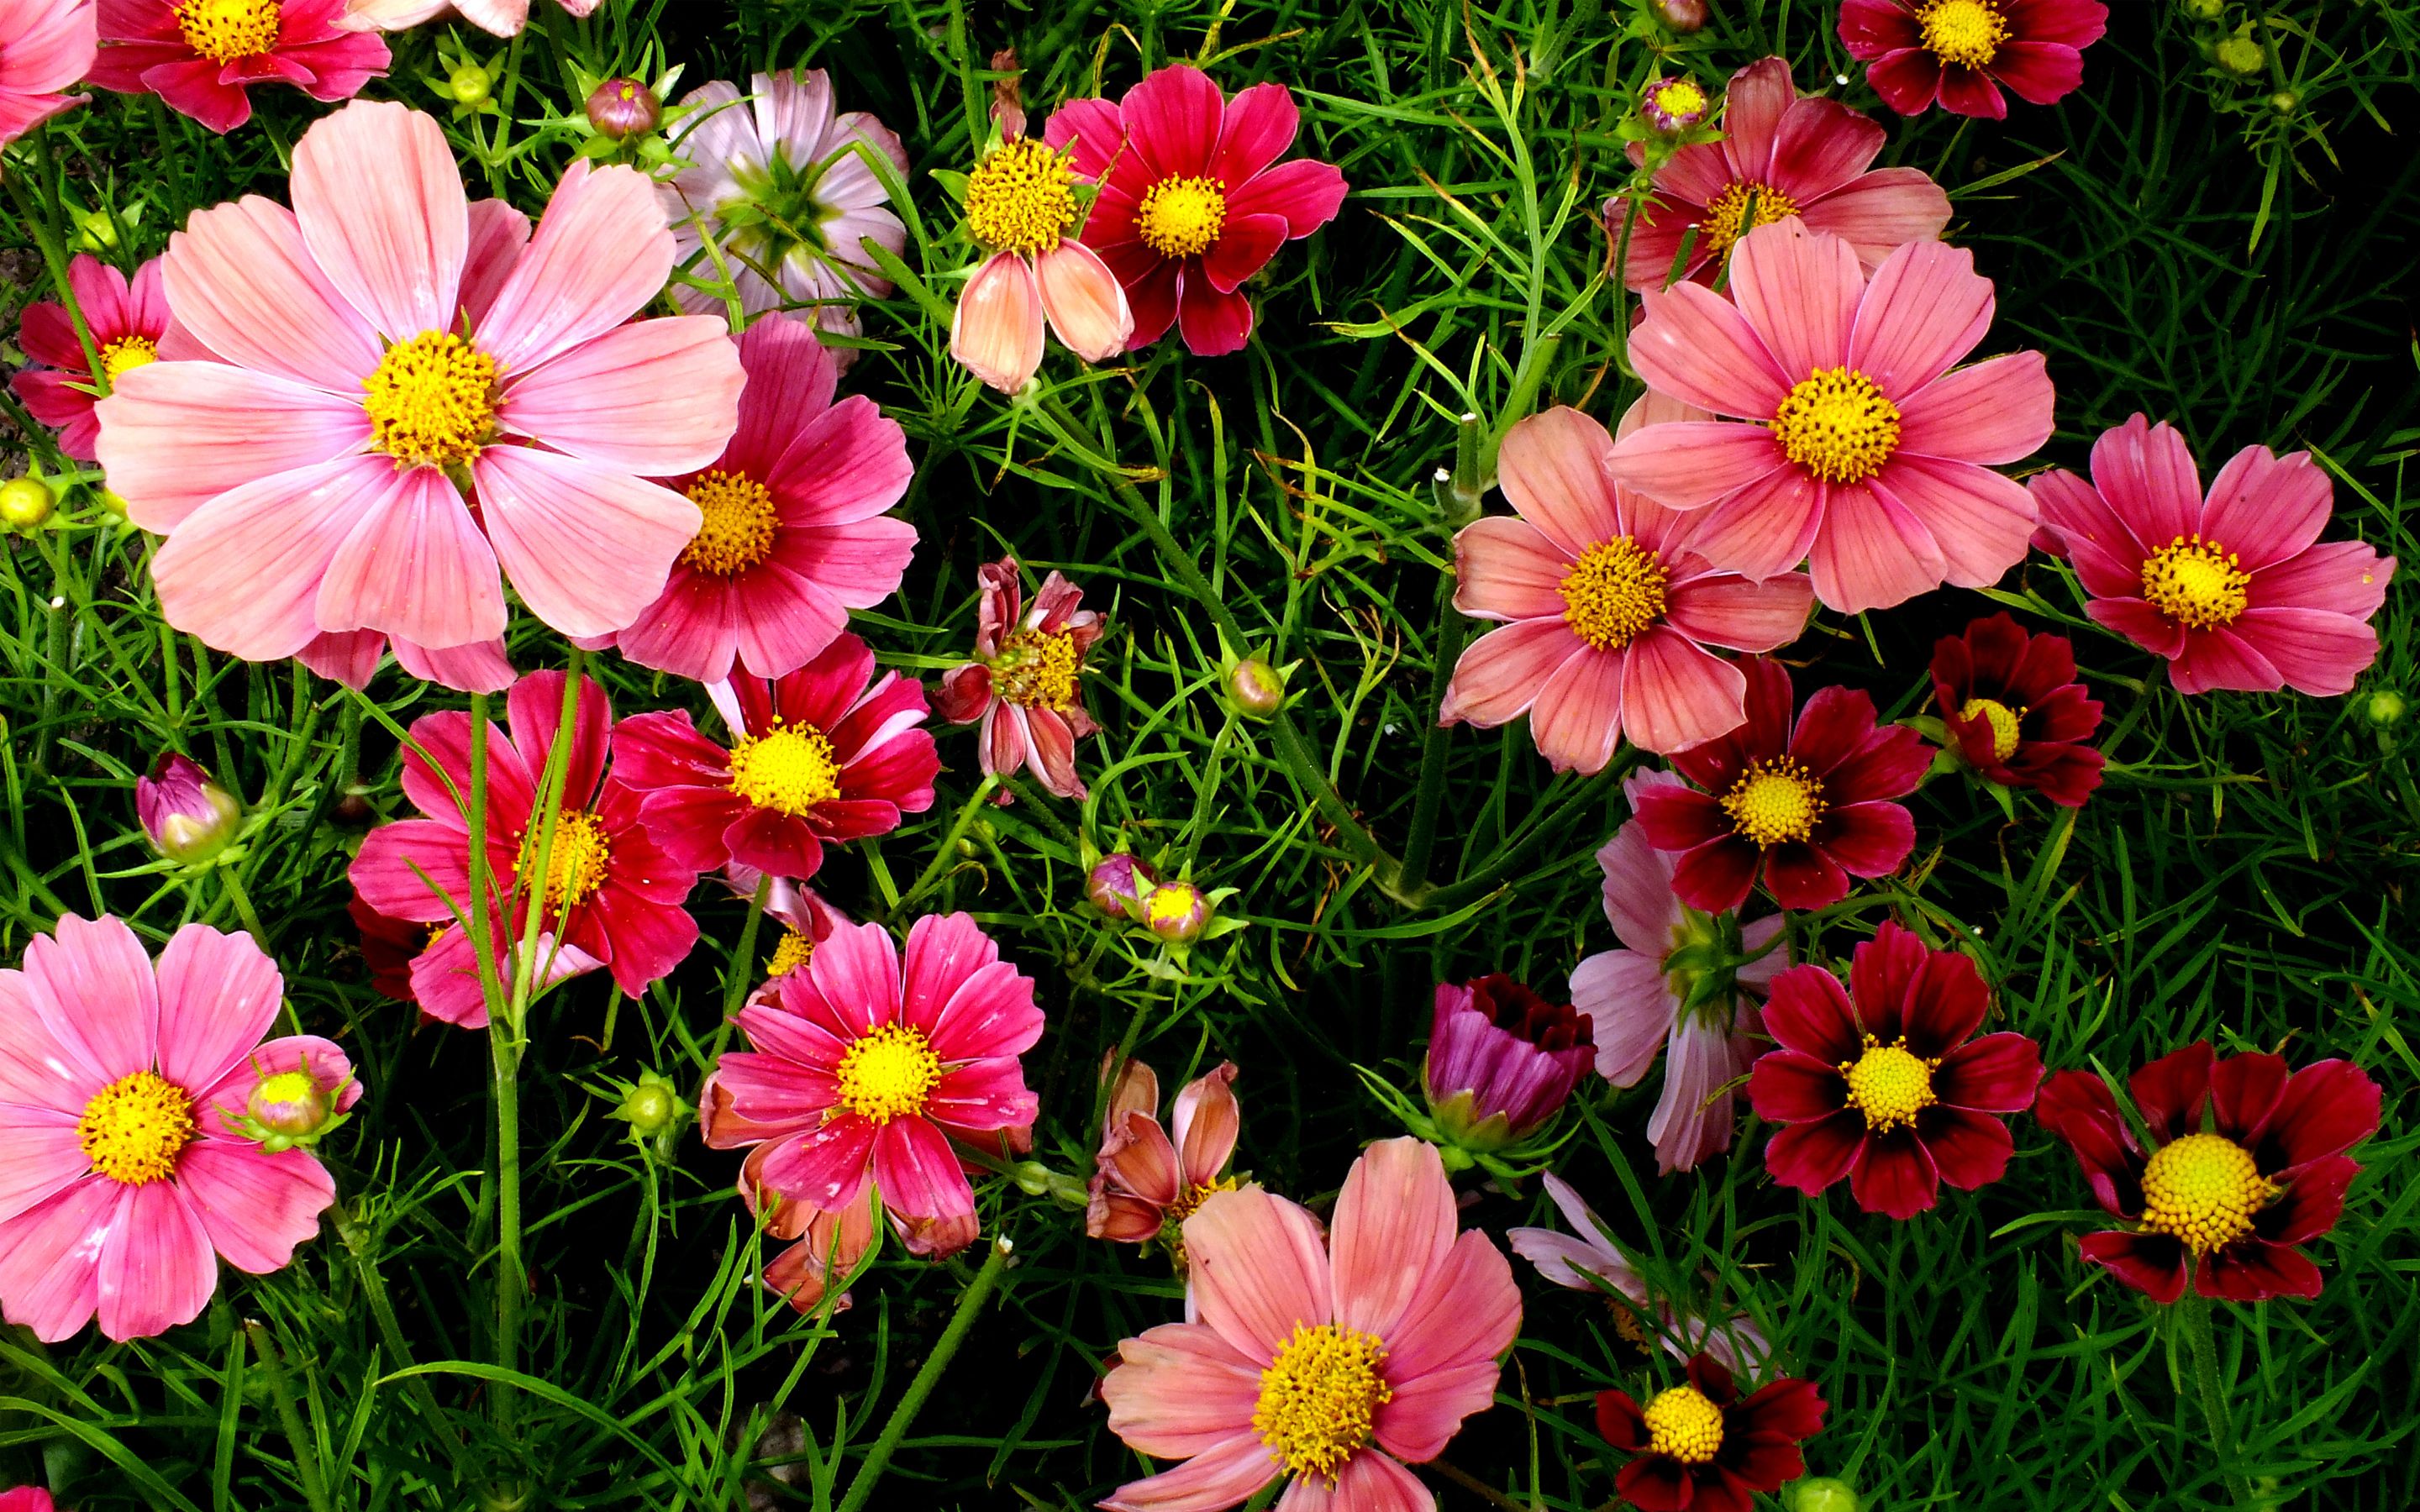 How flowering plants reproduce. Cosmos flowers, Flowers online, Flower image wallpaper